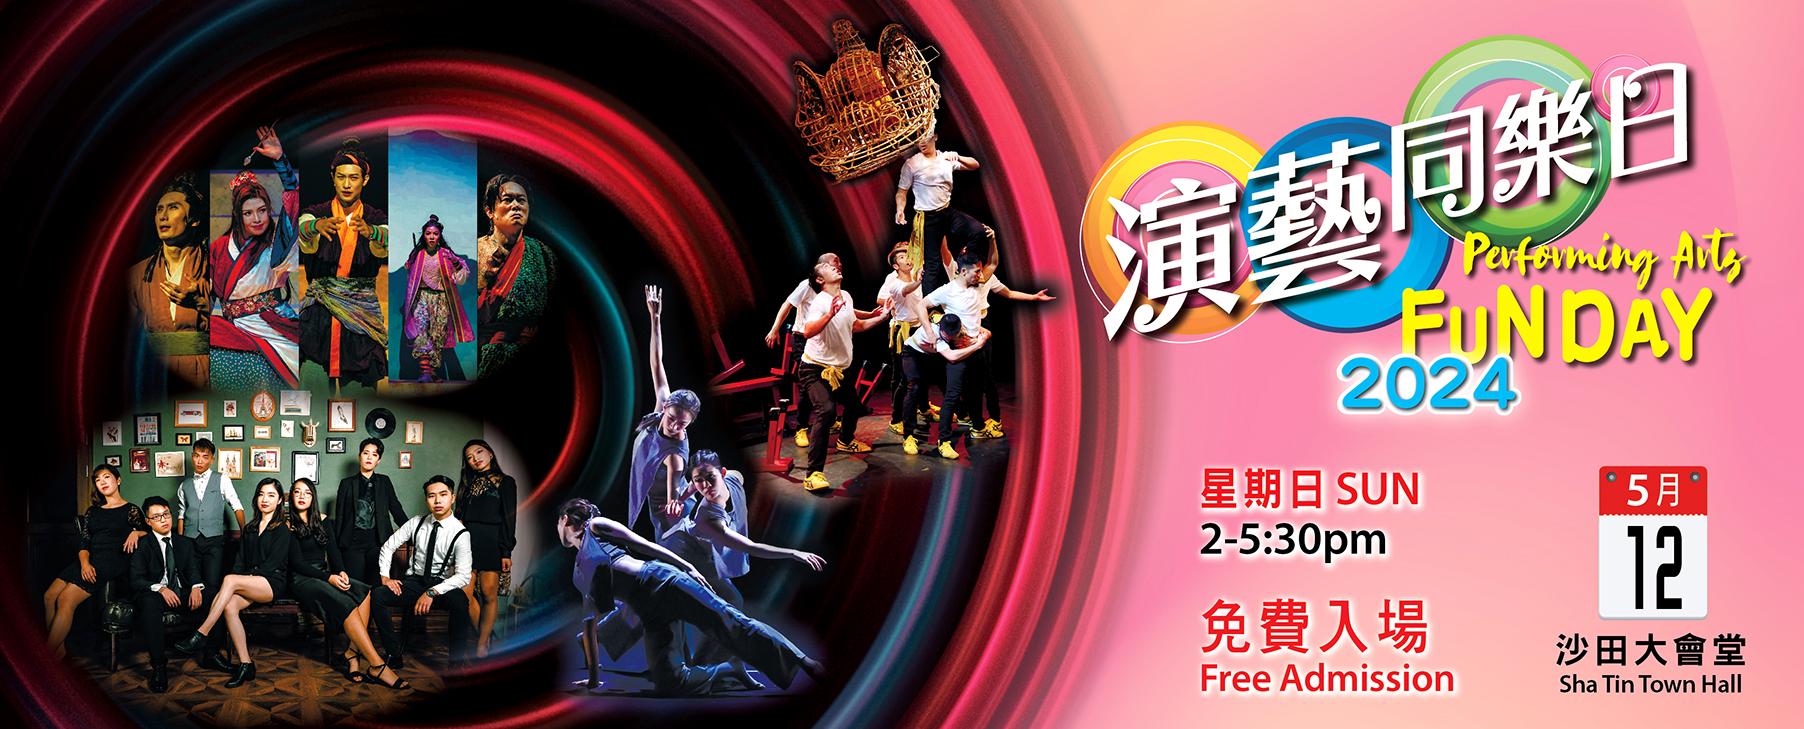 Performing Arts Fun Day 2024@Sha Tin Town Hall